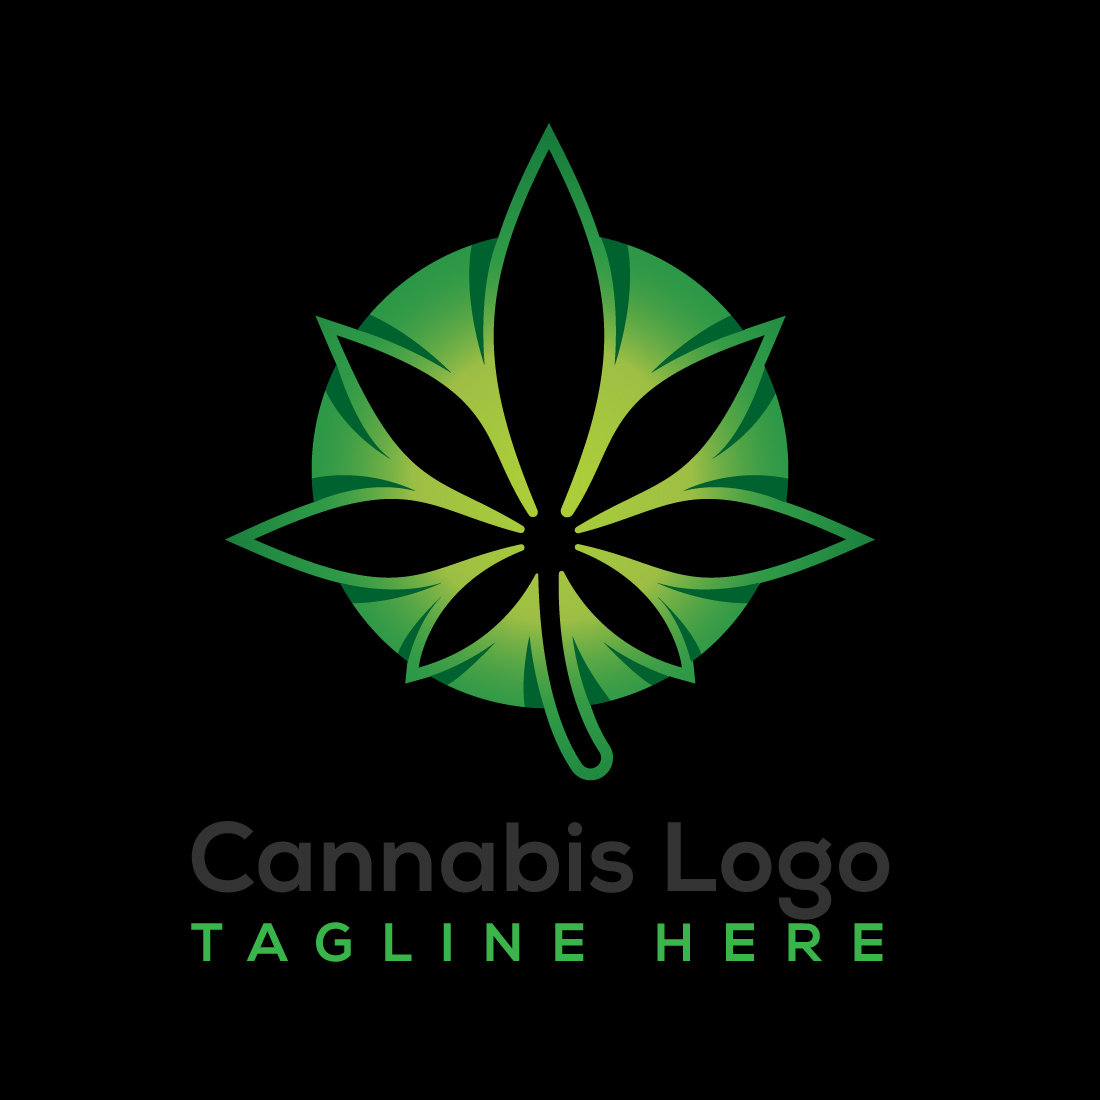 Modern Cannabis Leaf Logo Design with black background.